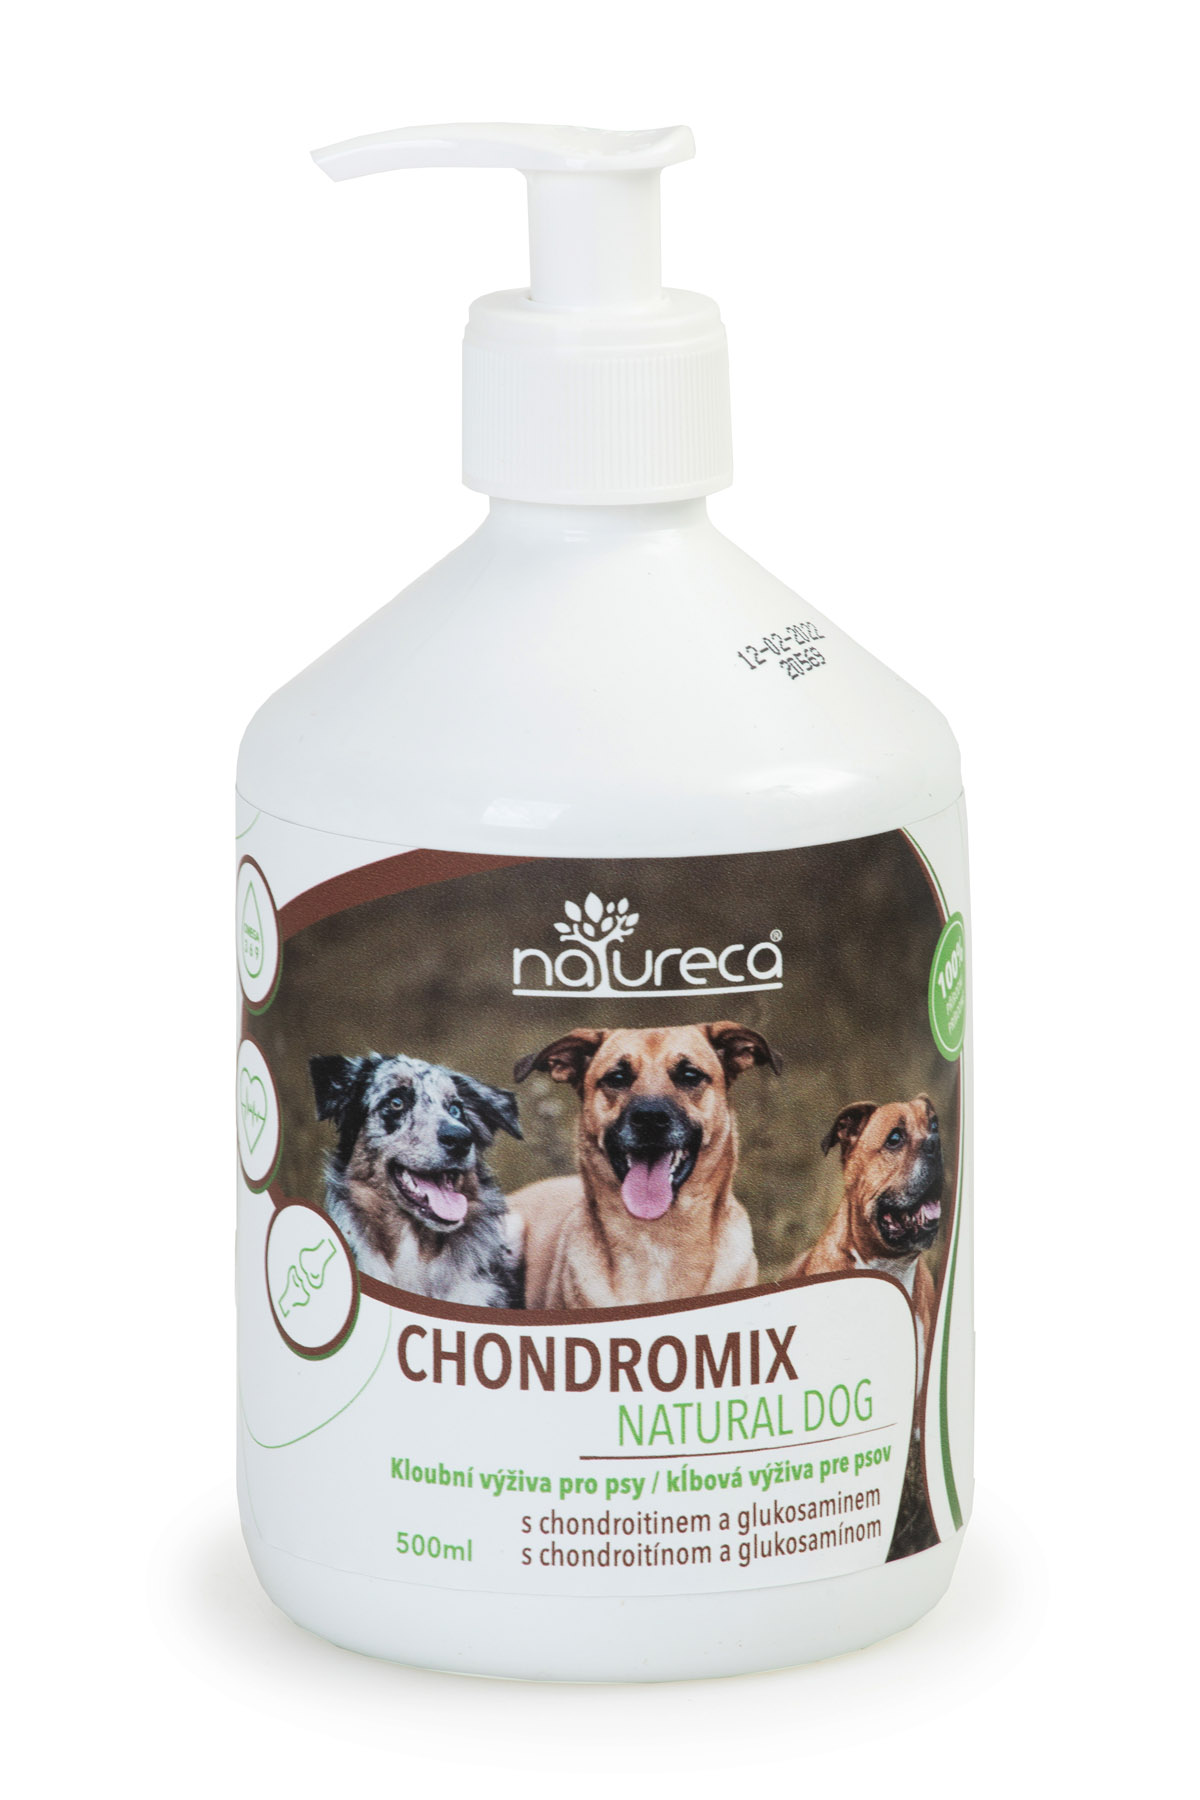 Chondromix Natural Dog 500ml